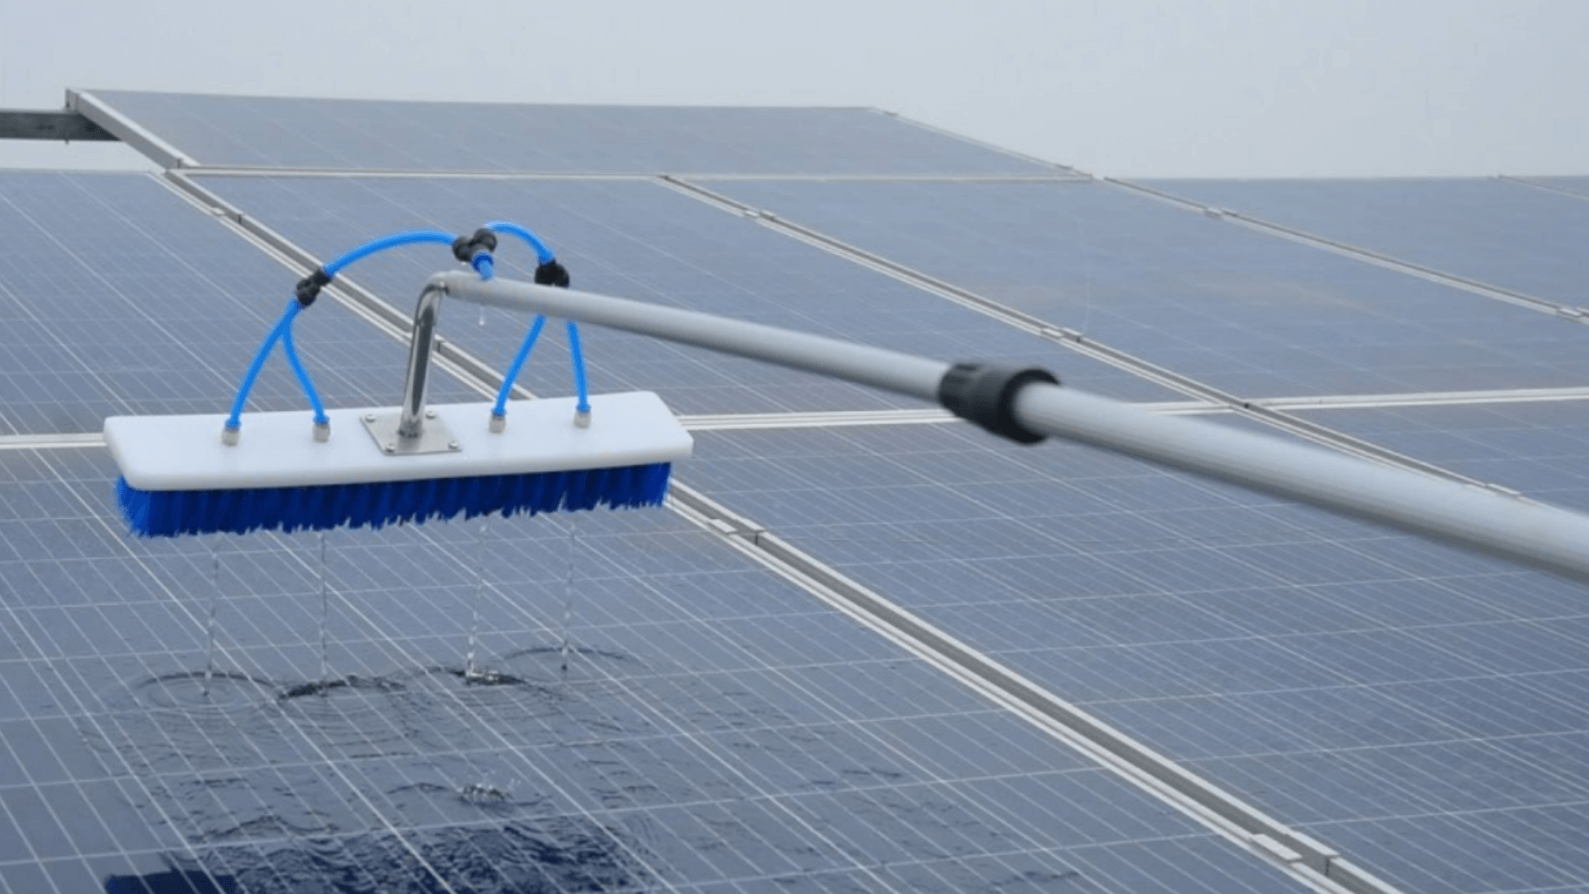 solar panel cleaning brush